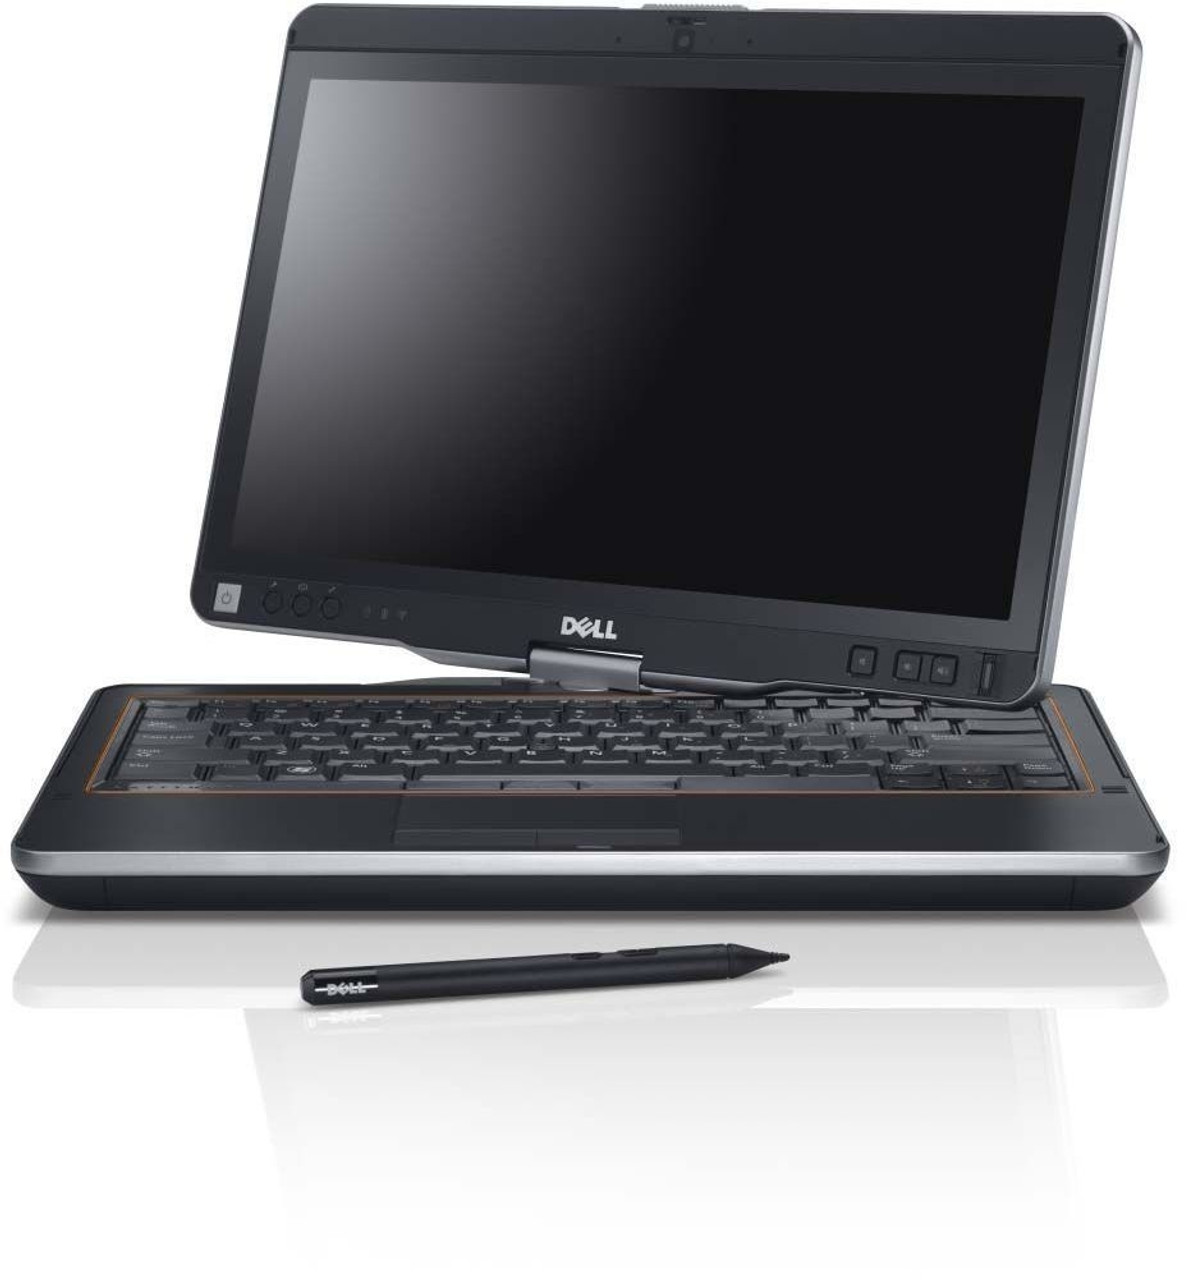 Dell Latitude XT3 Laptop Intel Core i7 8 GB 500 GB HDD Windows 10 Home